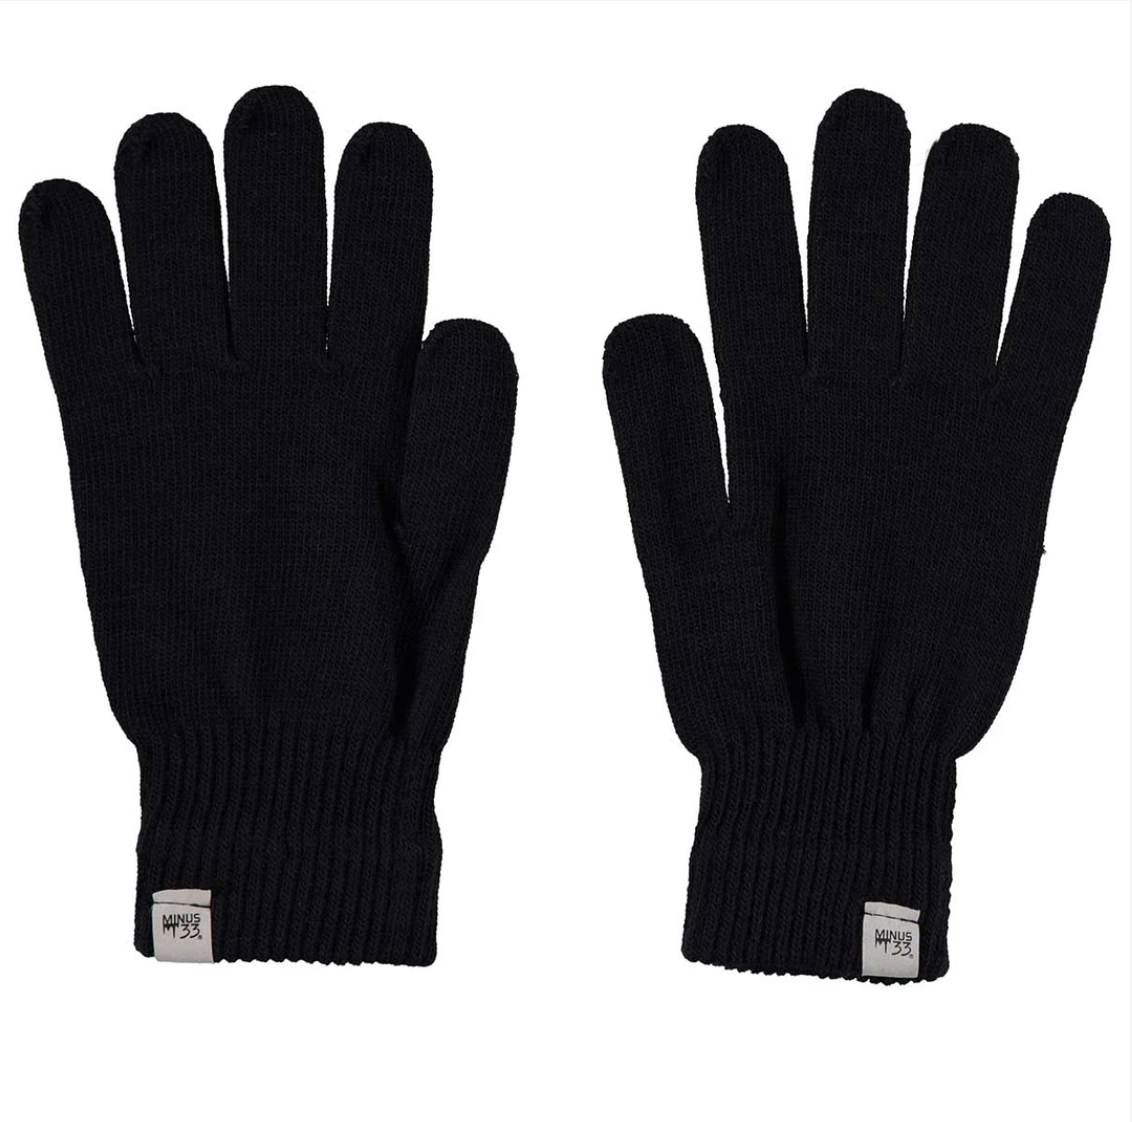 minus33 merino wool glove liners black 